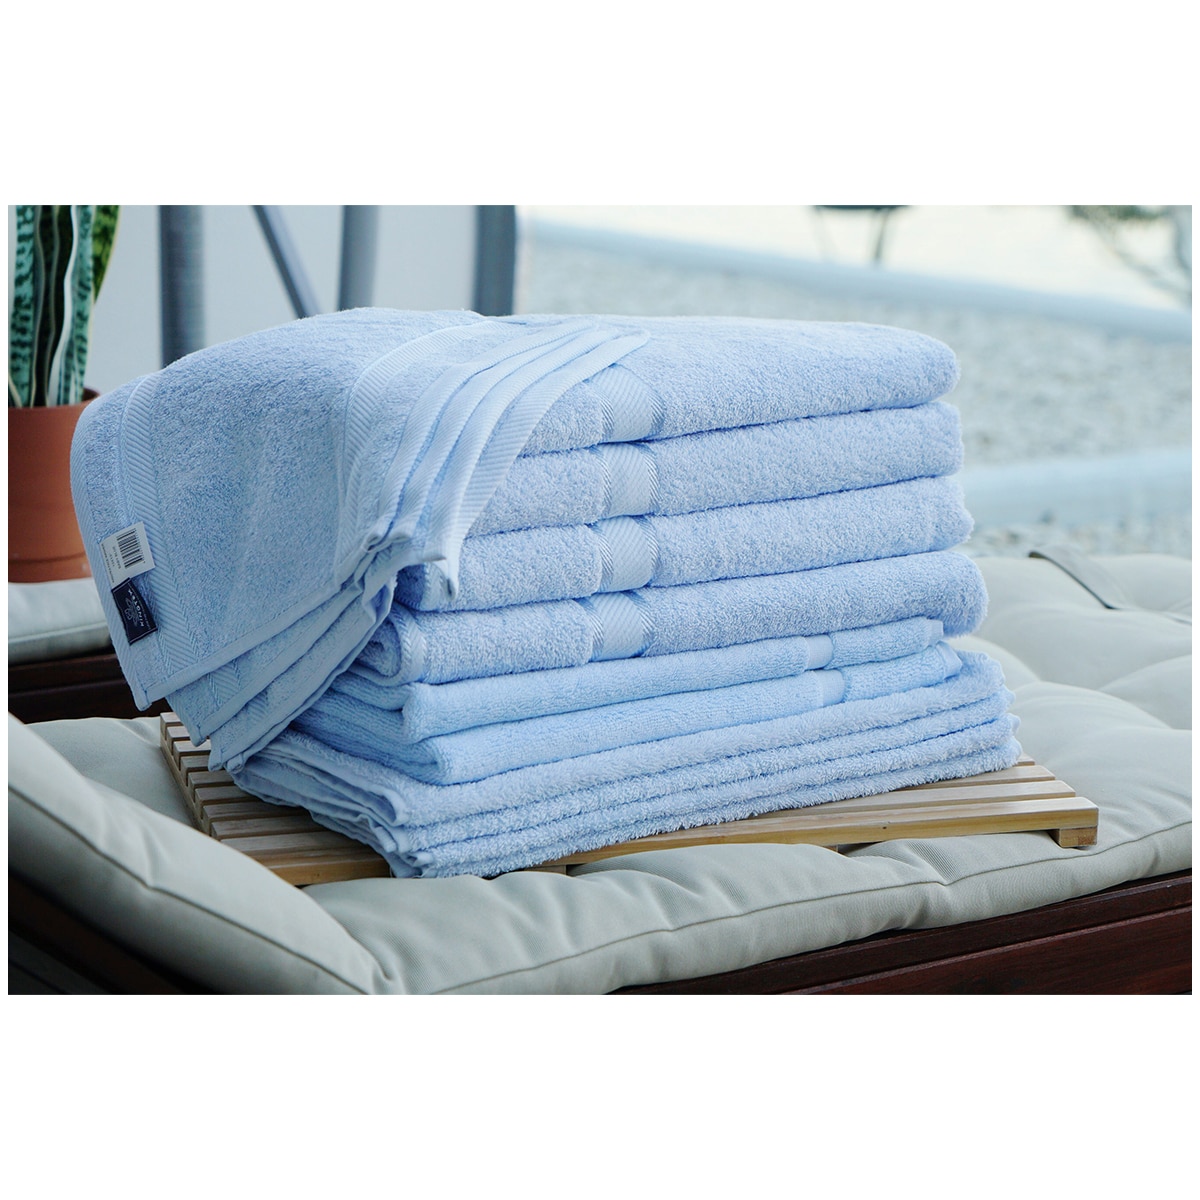 Kingtex Plain dyed 100% Combed Cotton towel range 550gsm Bath Sheet set 14 piece - Baby Blue